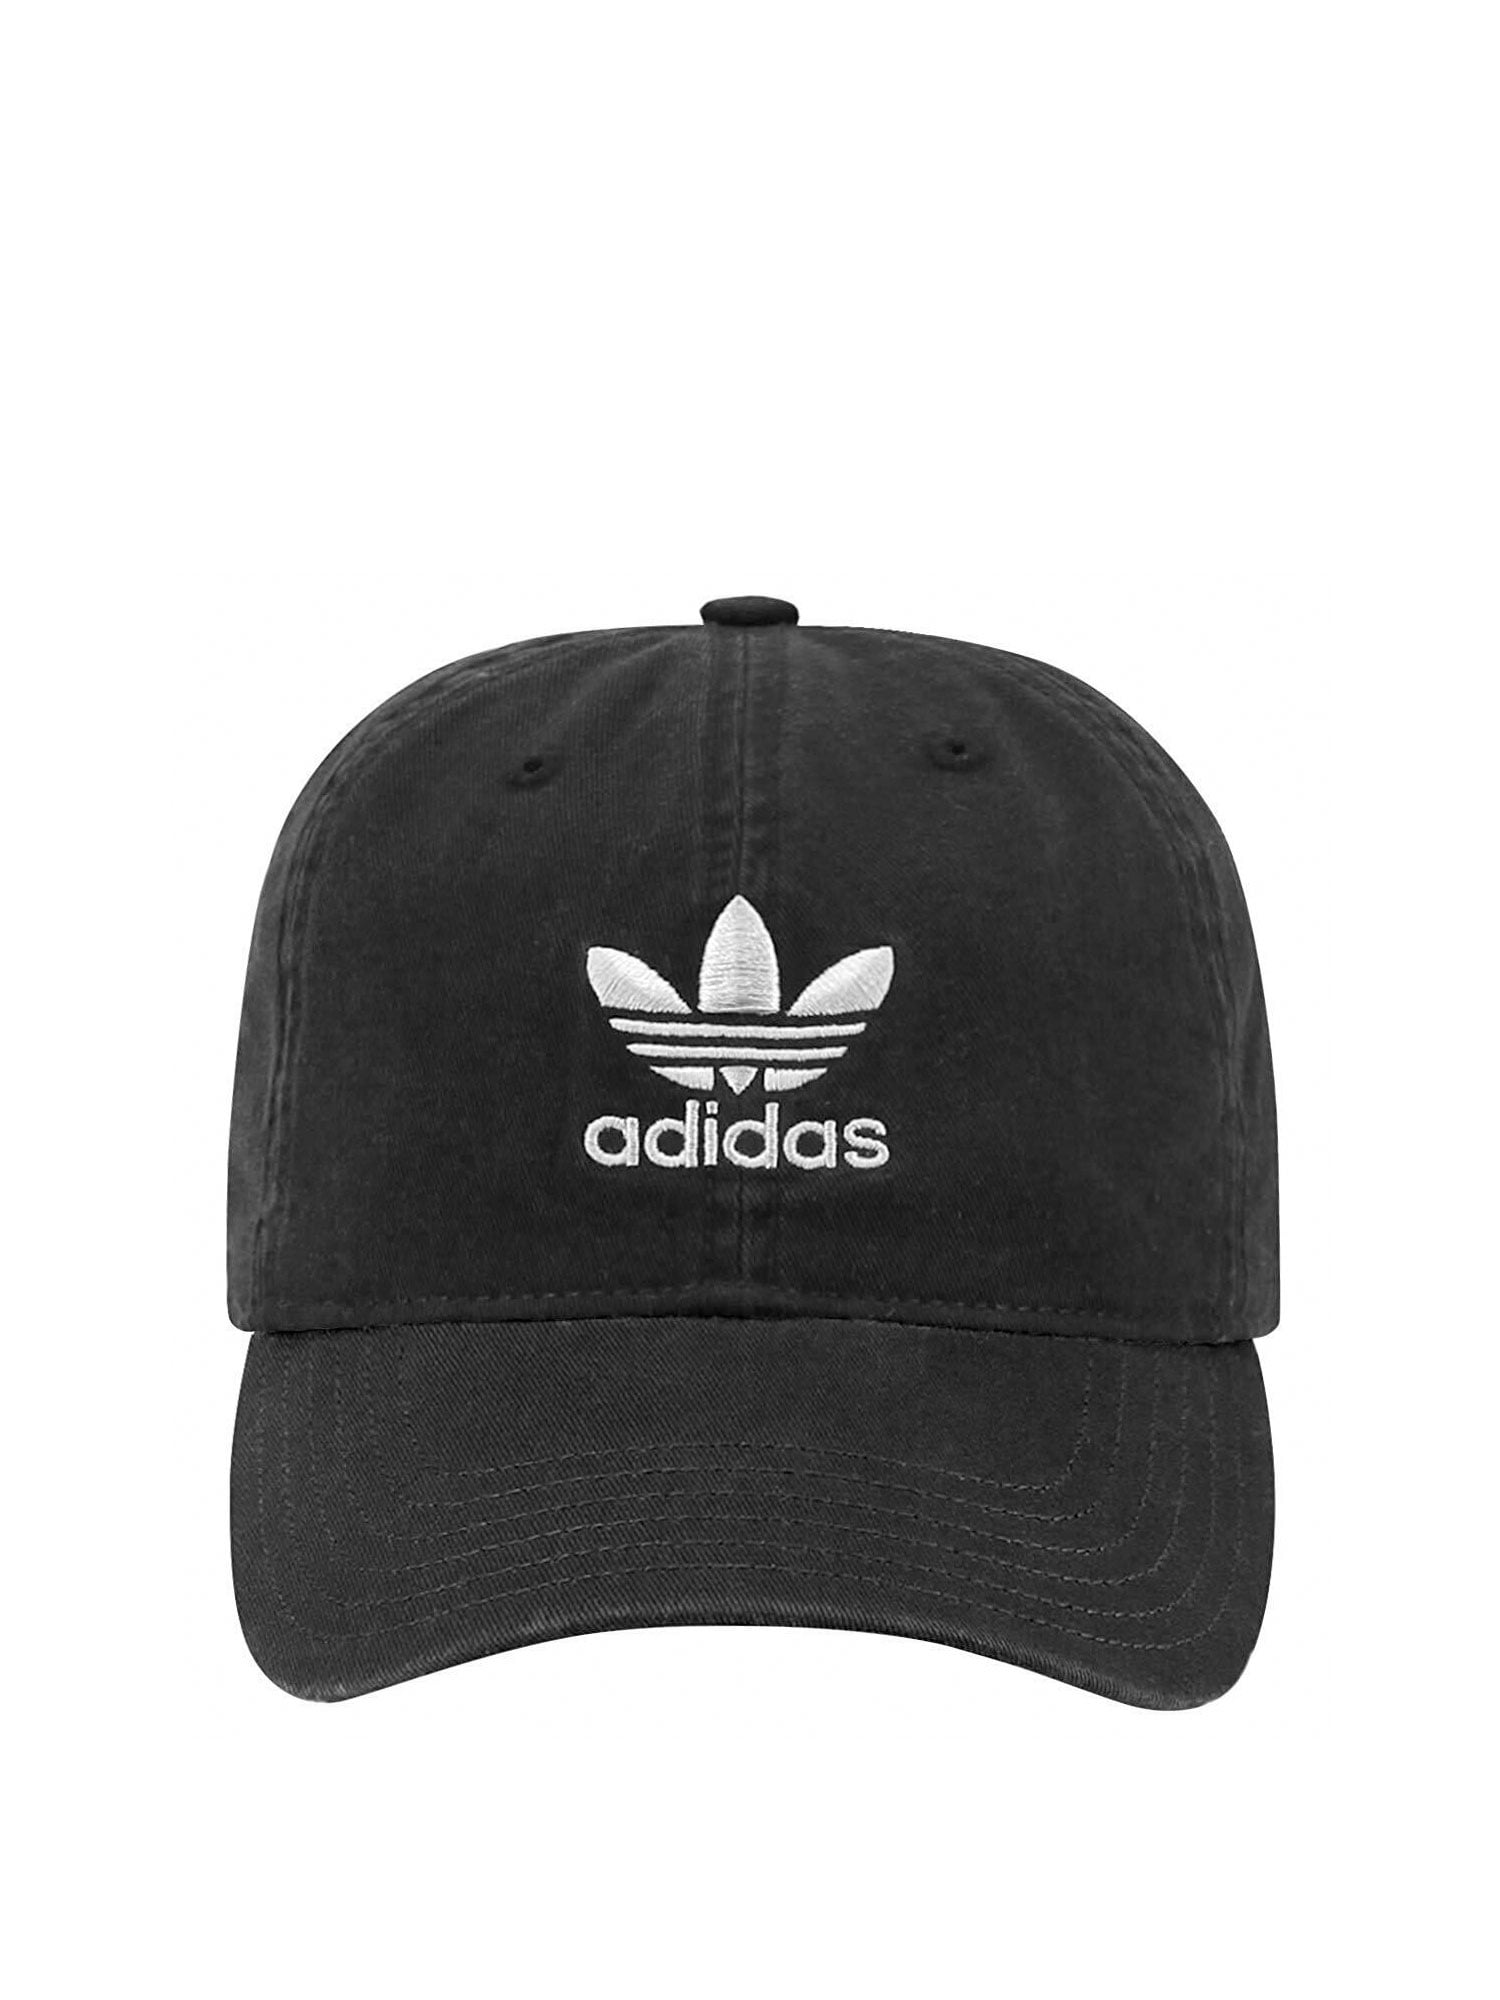 adidas packable cap